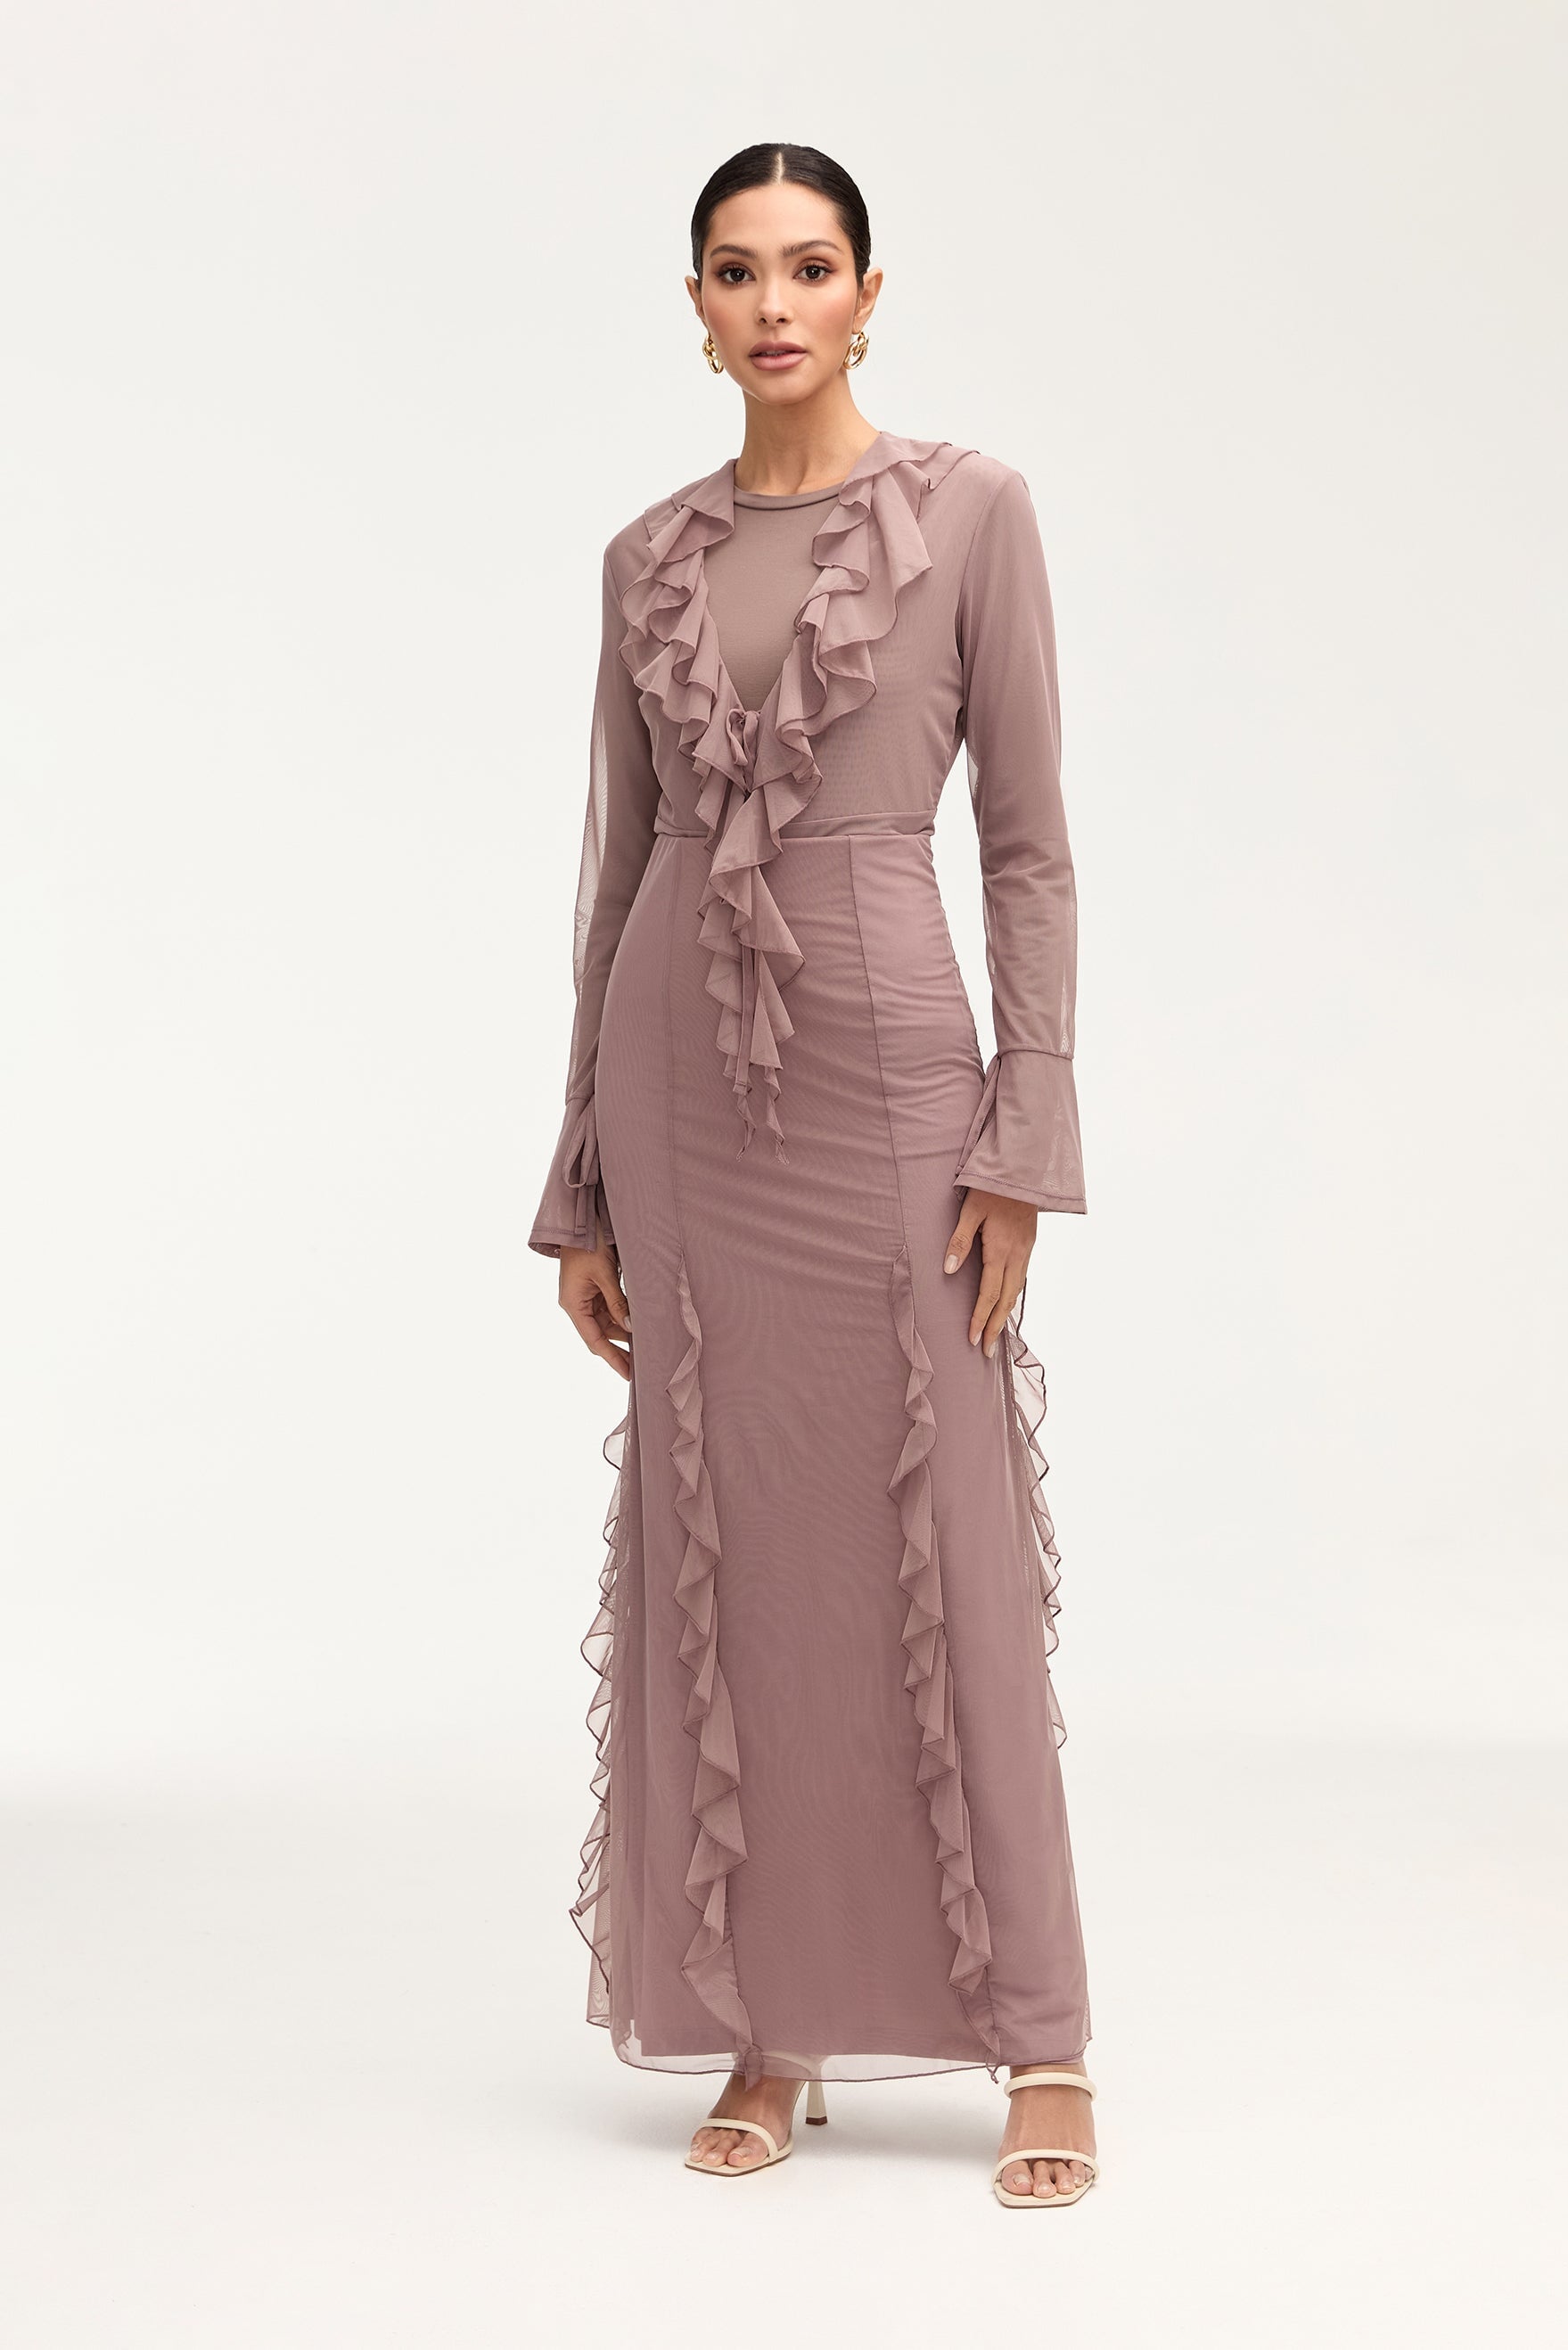 Adriana Waterfall Mesh Maxi Skirt - Twilight Mauve Clothing Veiled 